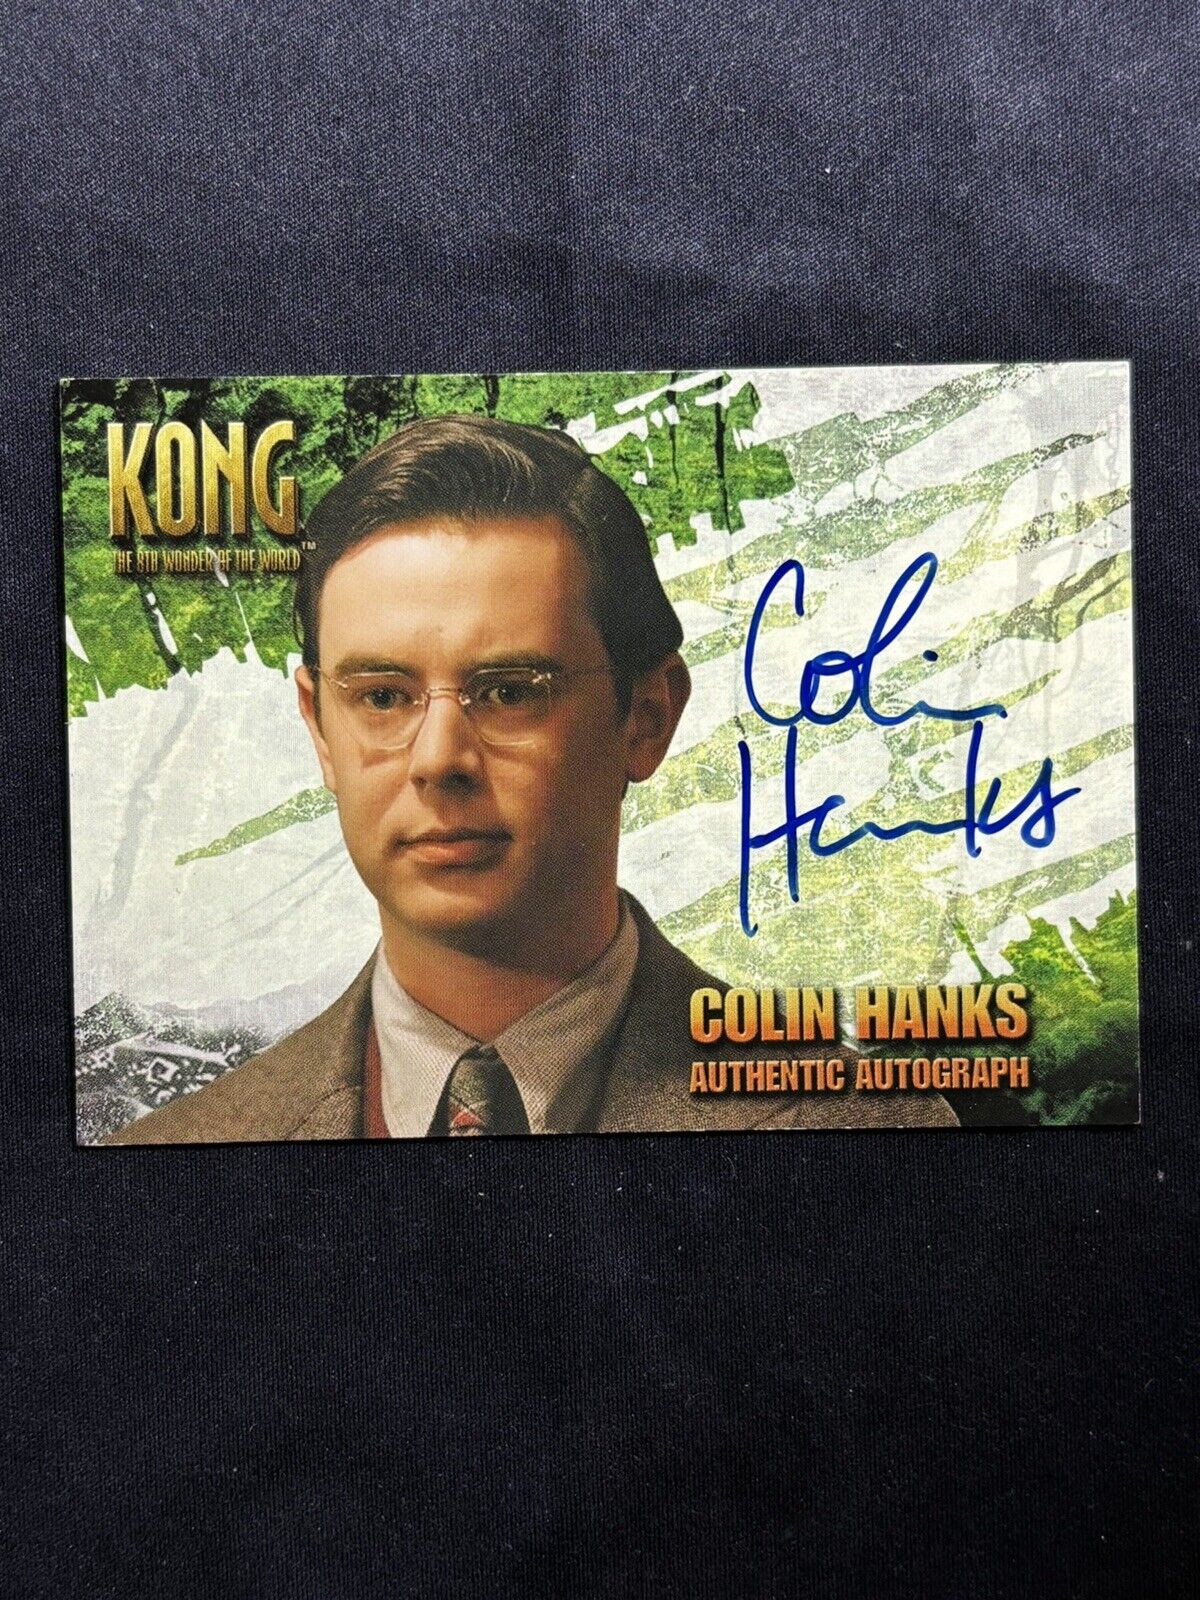 COLIN HANKS 2005 Topps KING KONG MOVIE AUTOGRAPH AS PRESTON